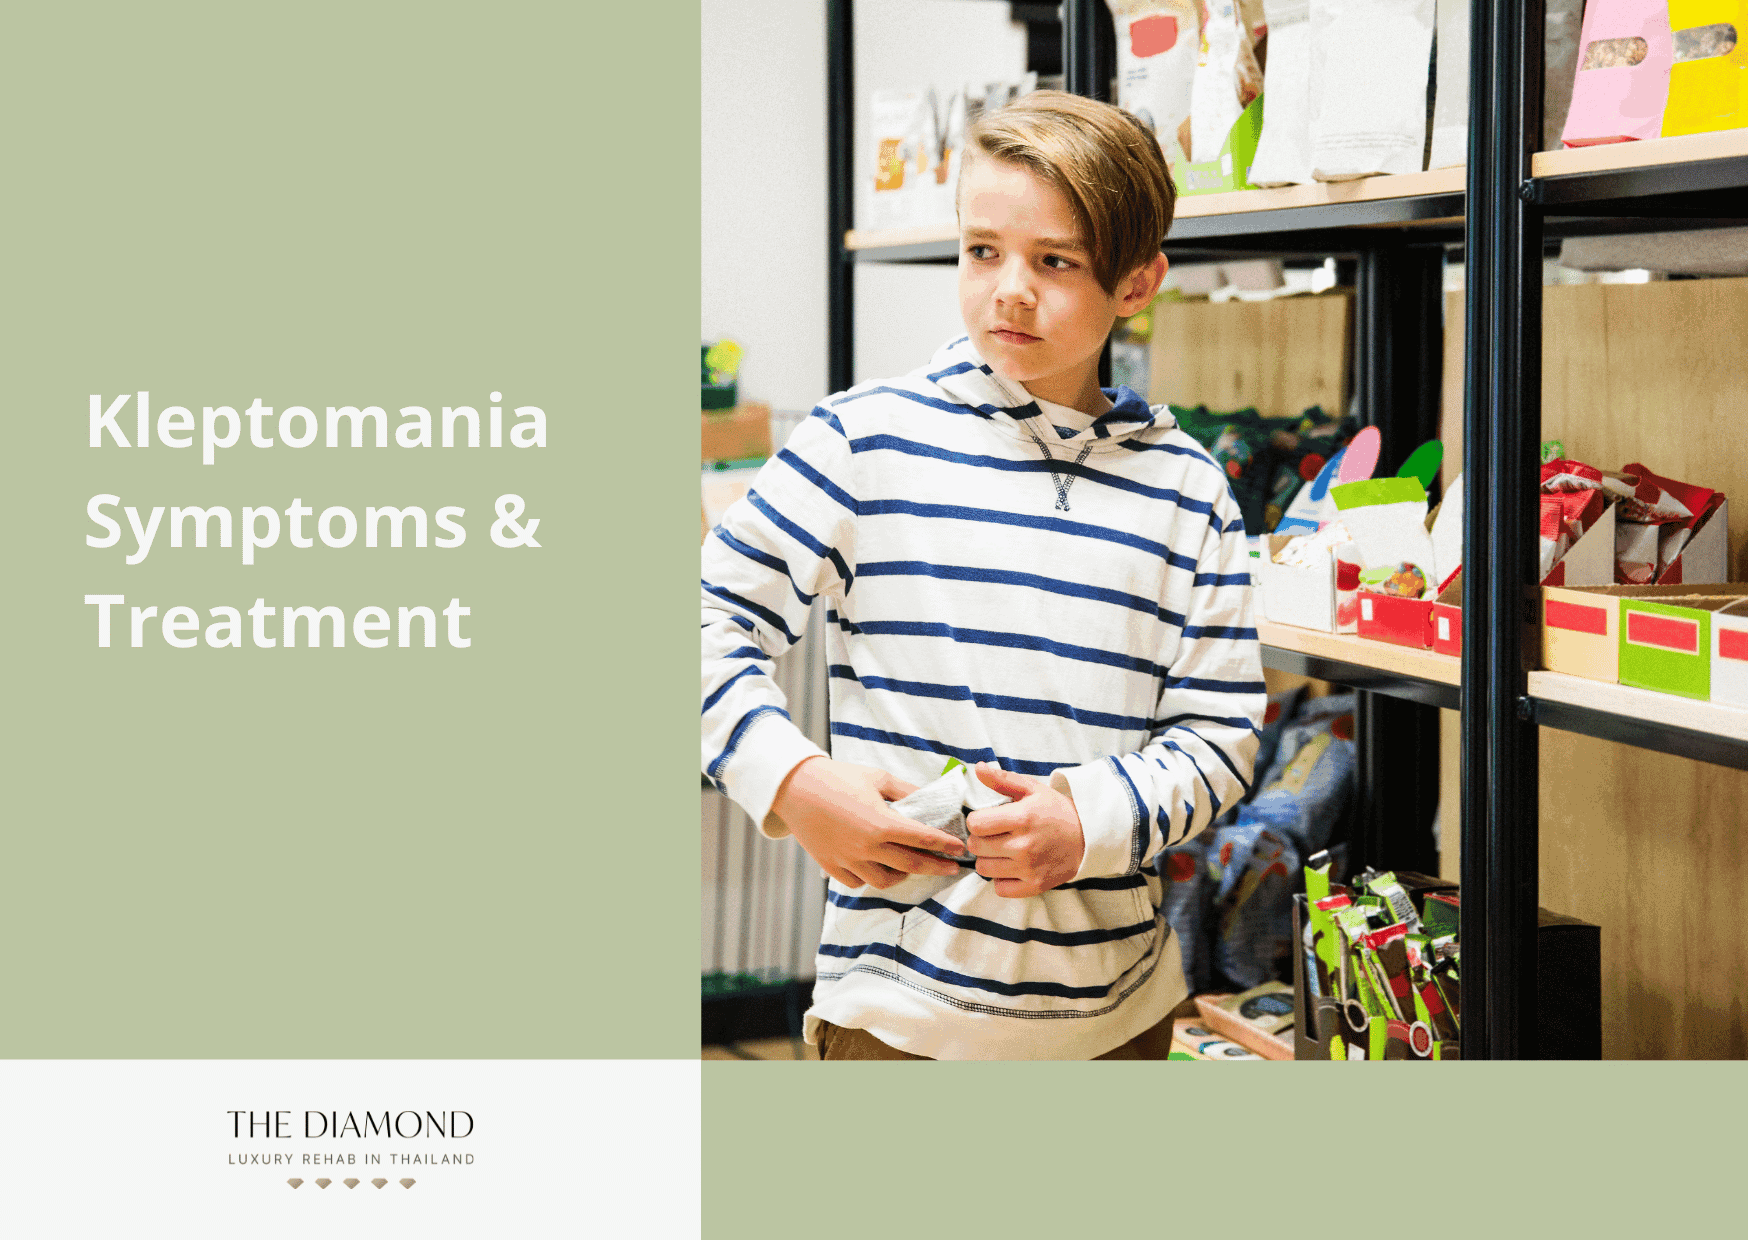 Kleptomania symptoms and treatment